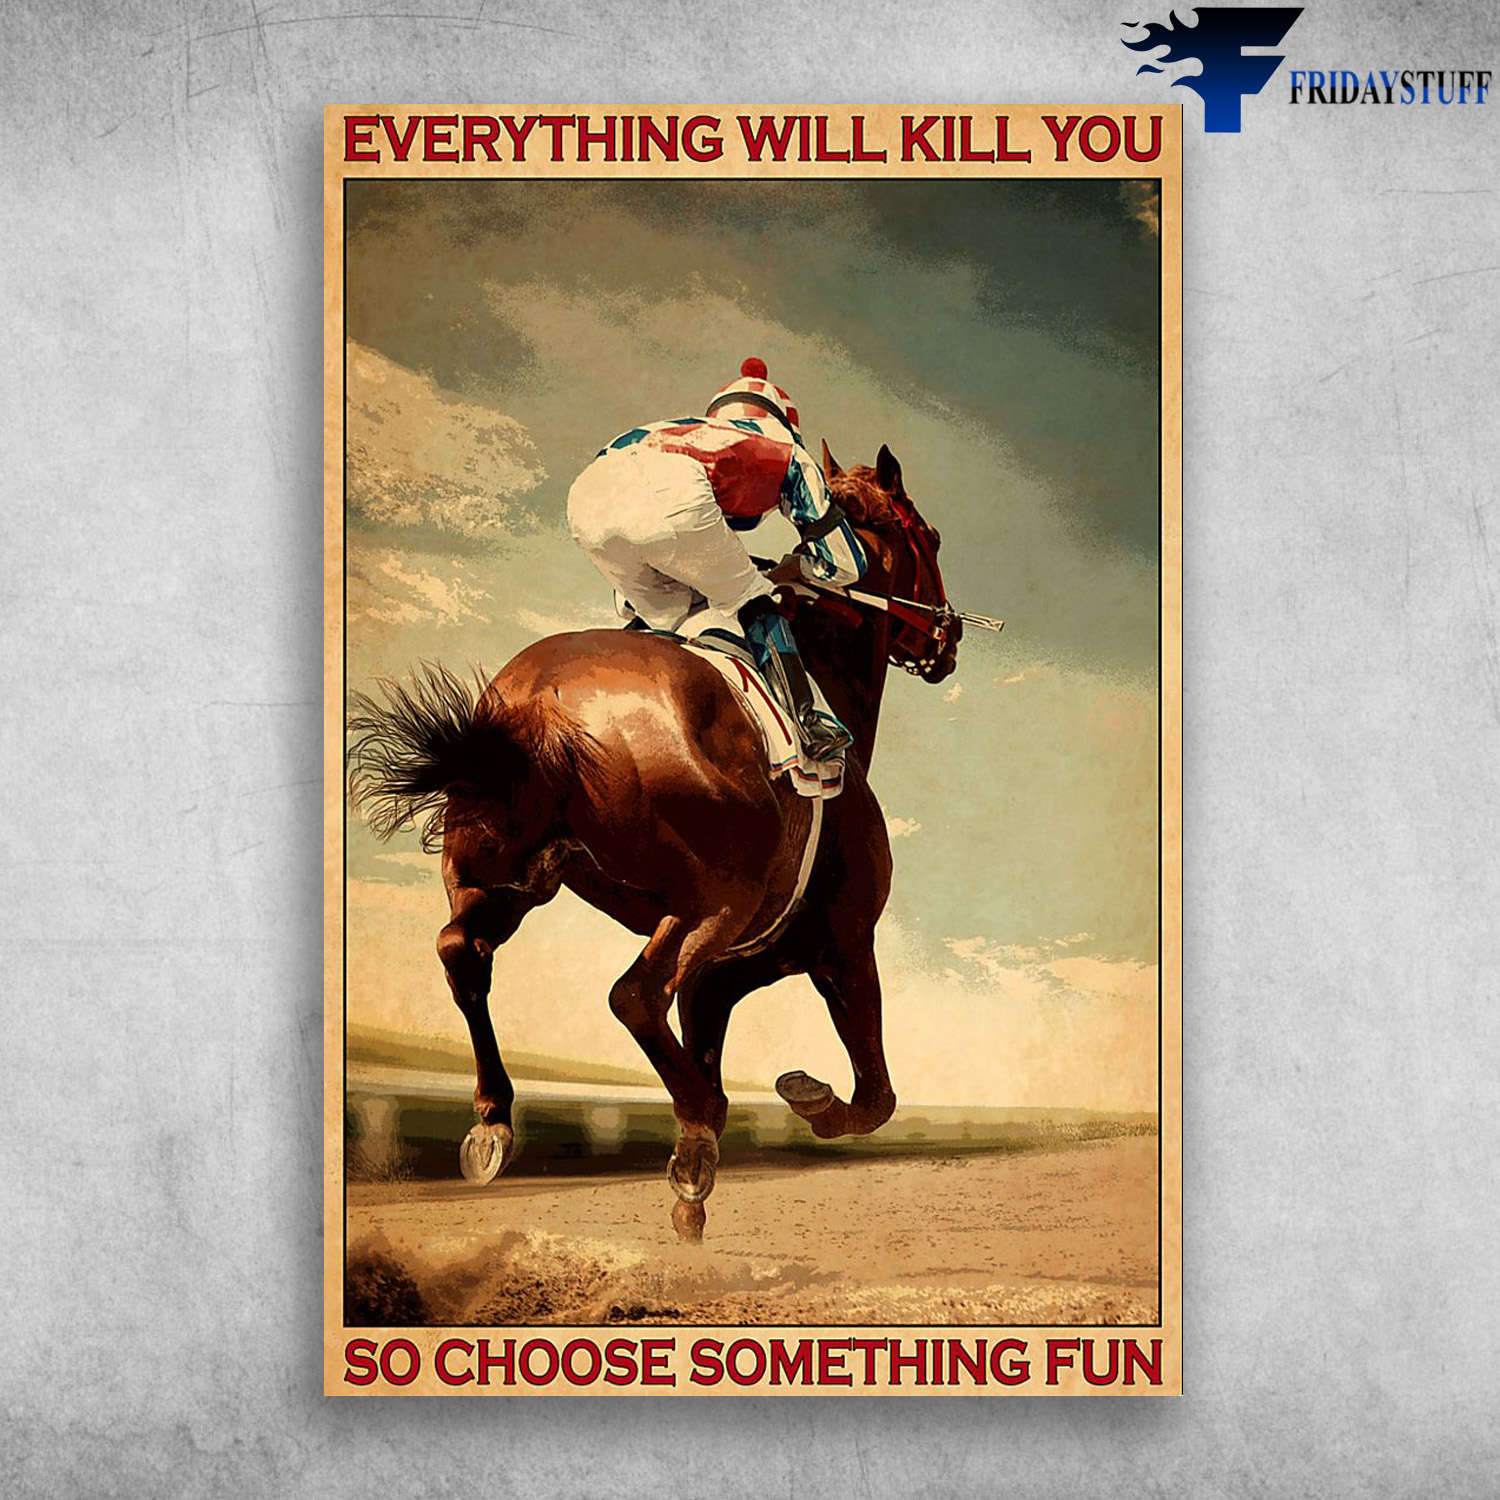 Man Riding Horse - Everything Will Kill You, So Choose Something Fun